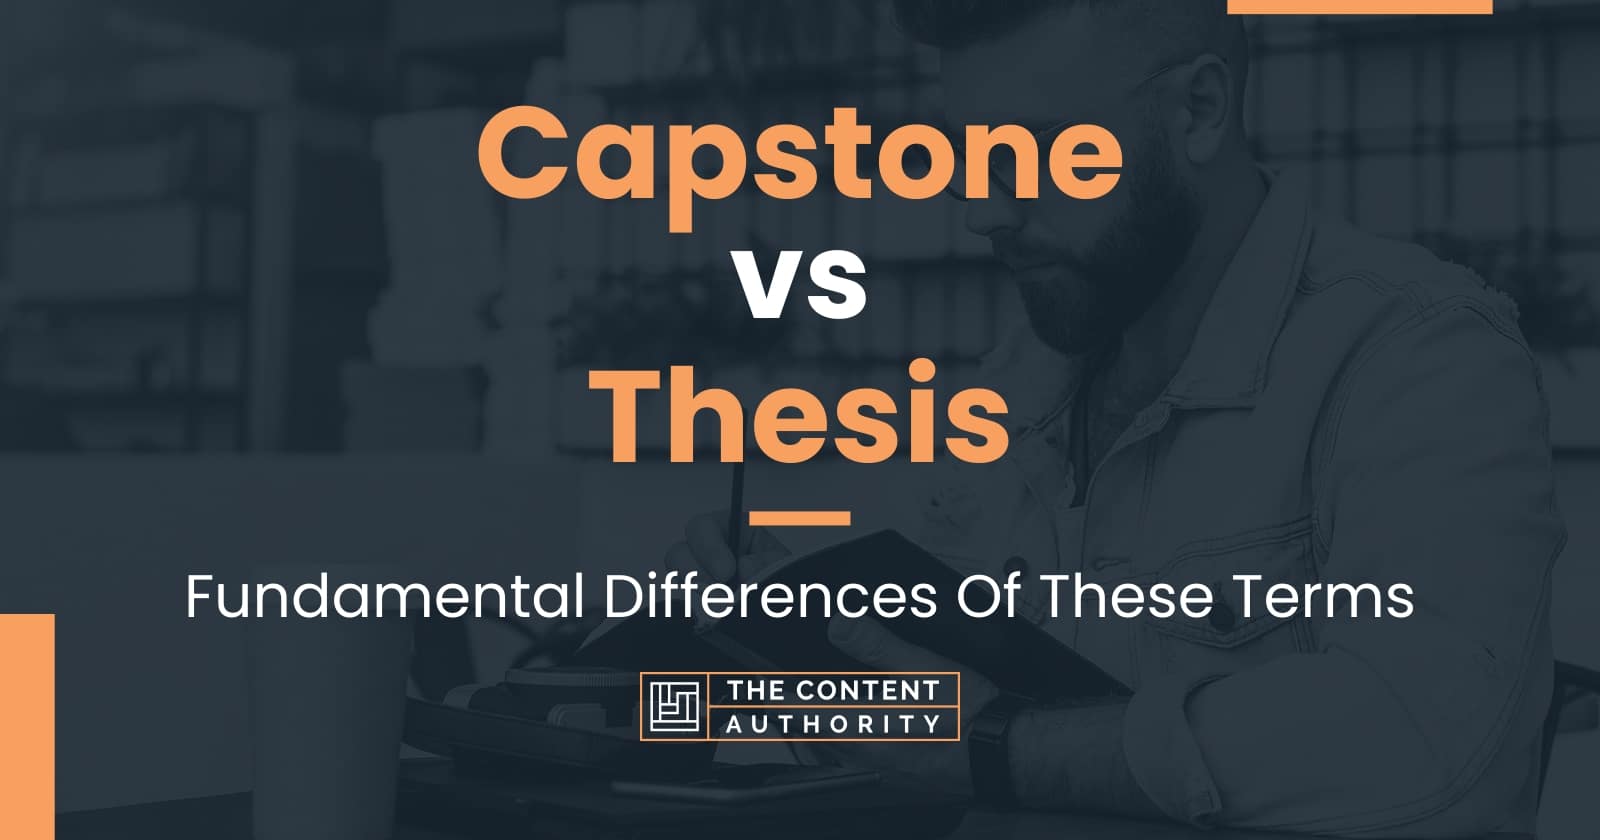 capstone vs thesis reddit